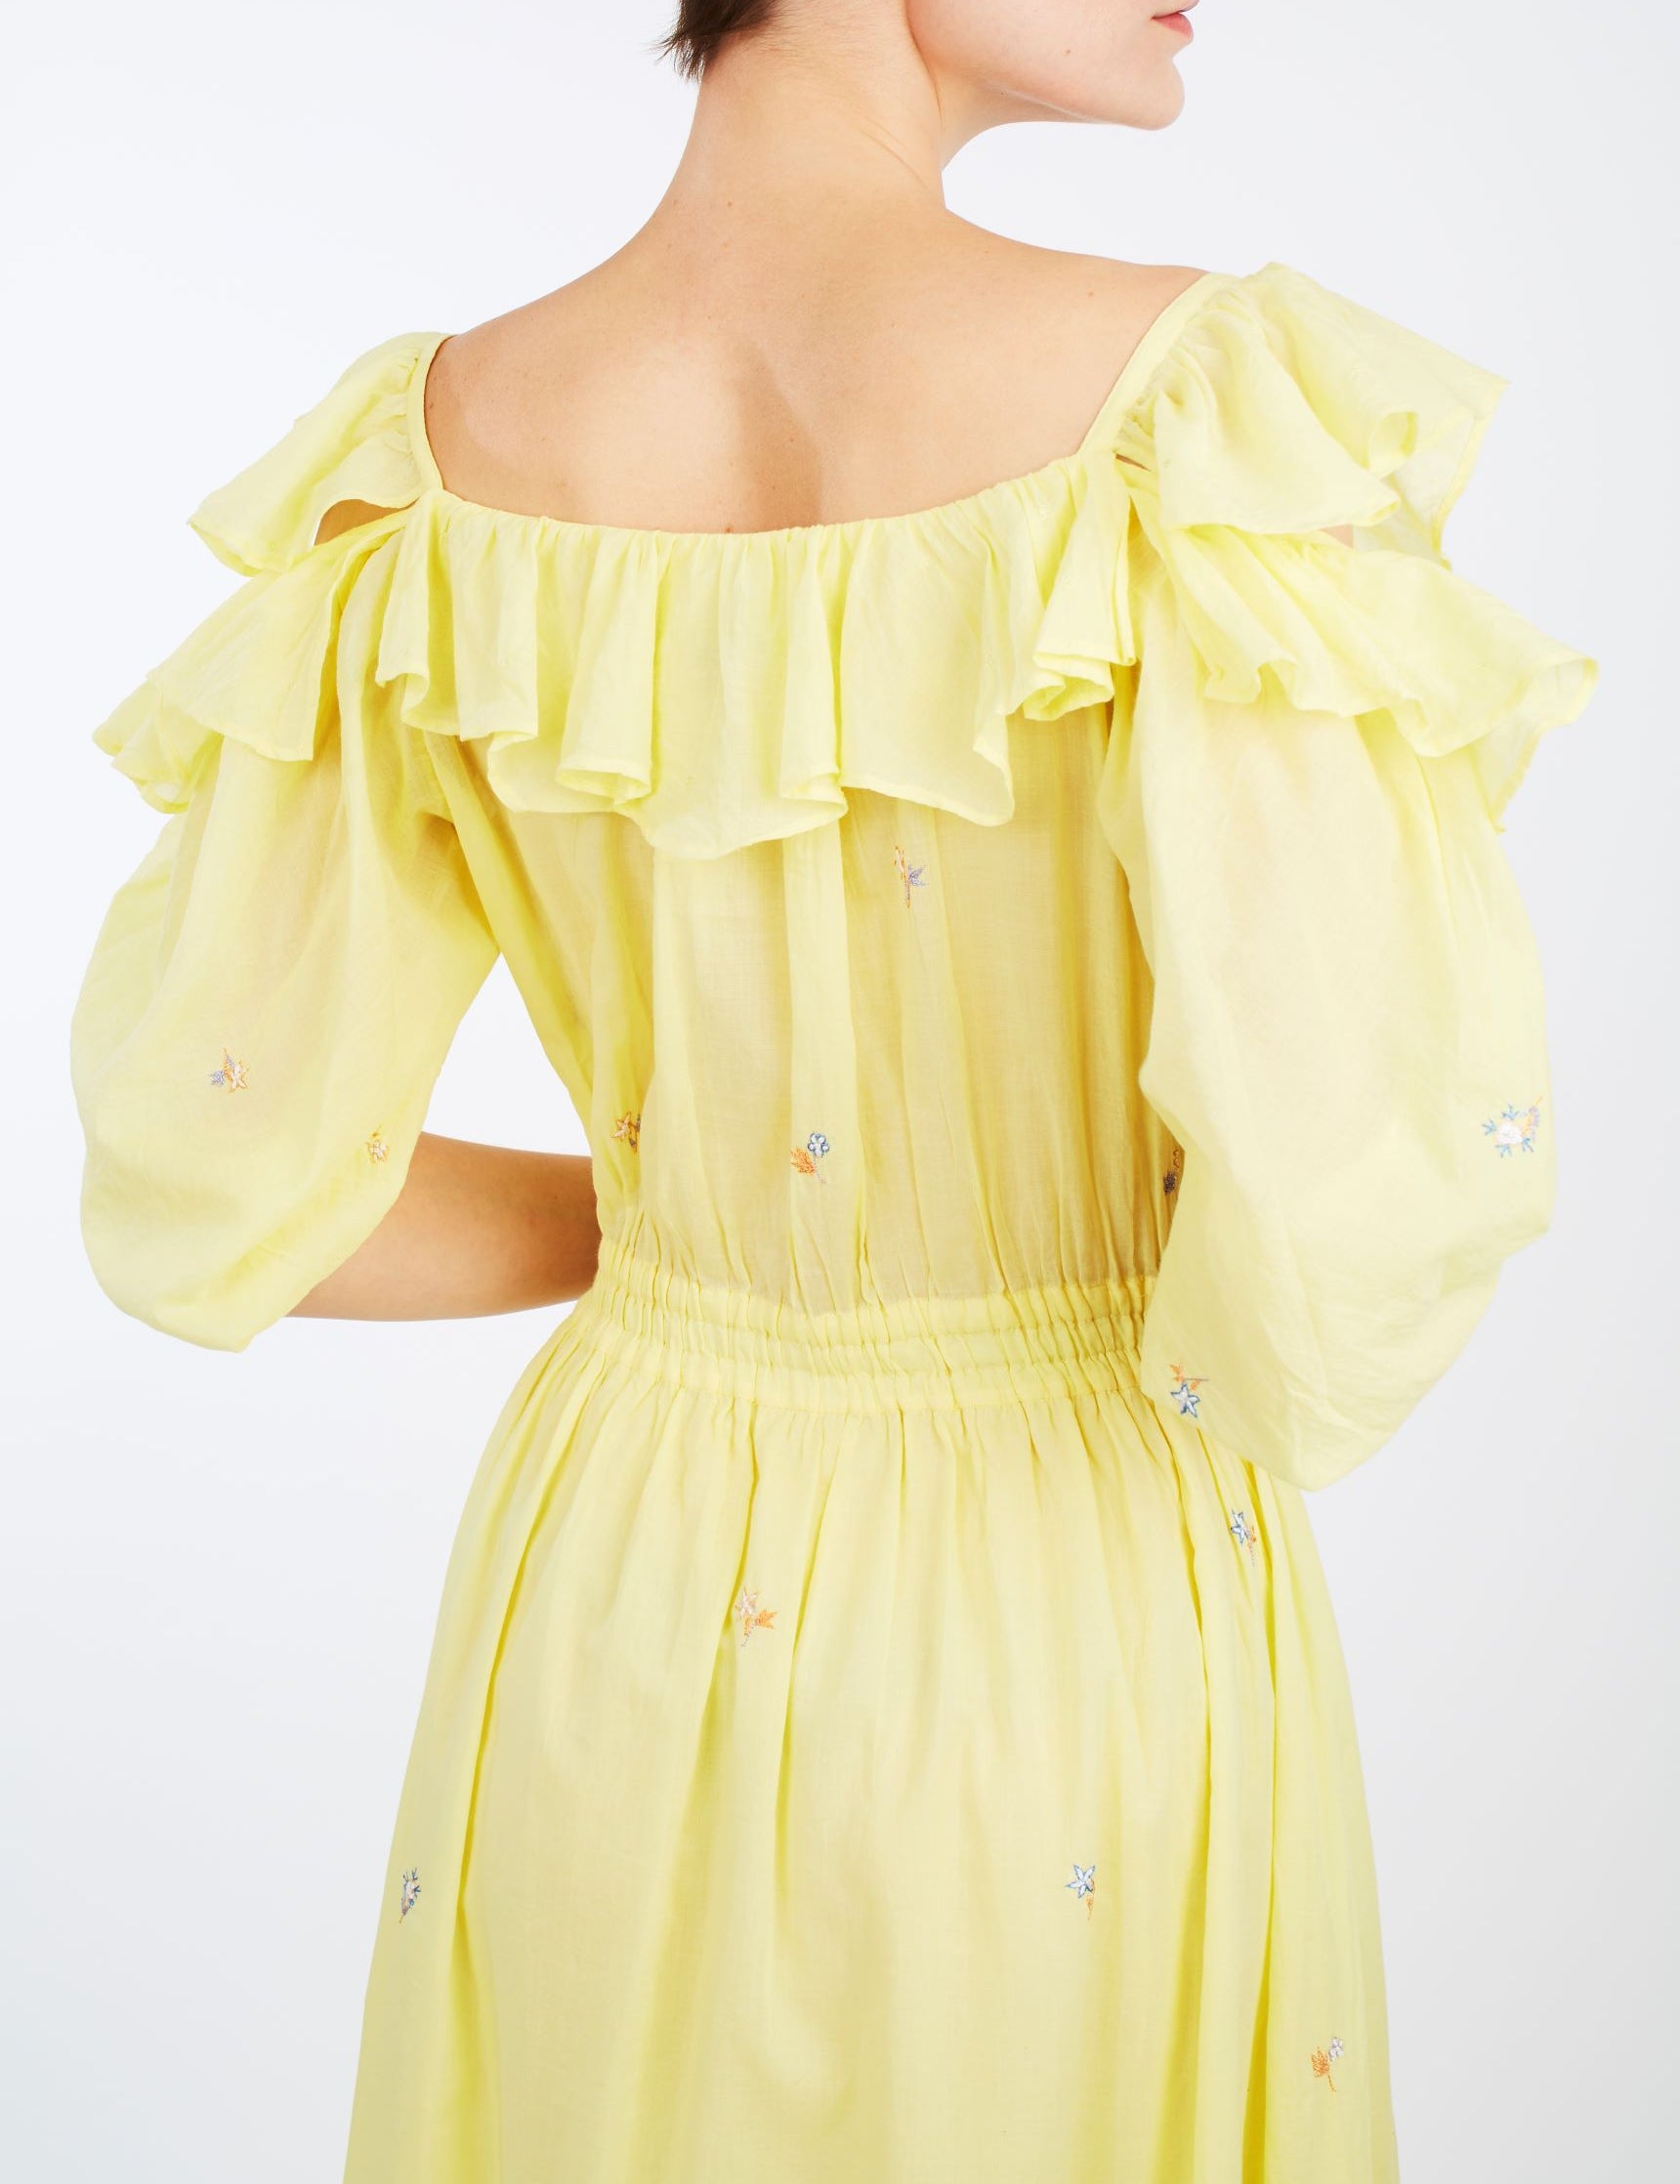 Collar back detail of Venus Boudoir Sweet Lemon Dress by Thierry Colson